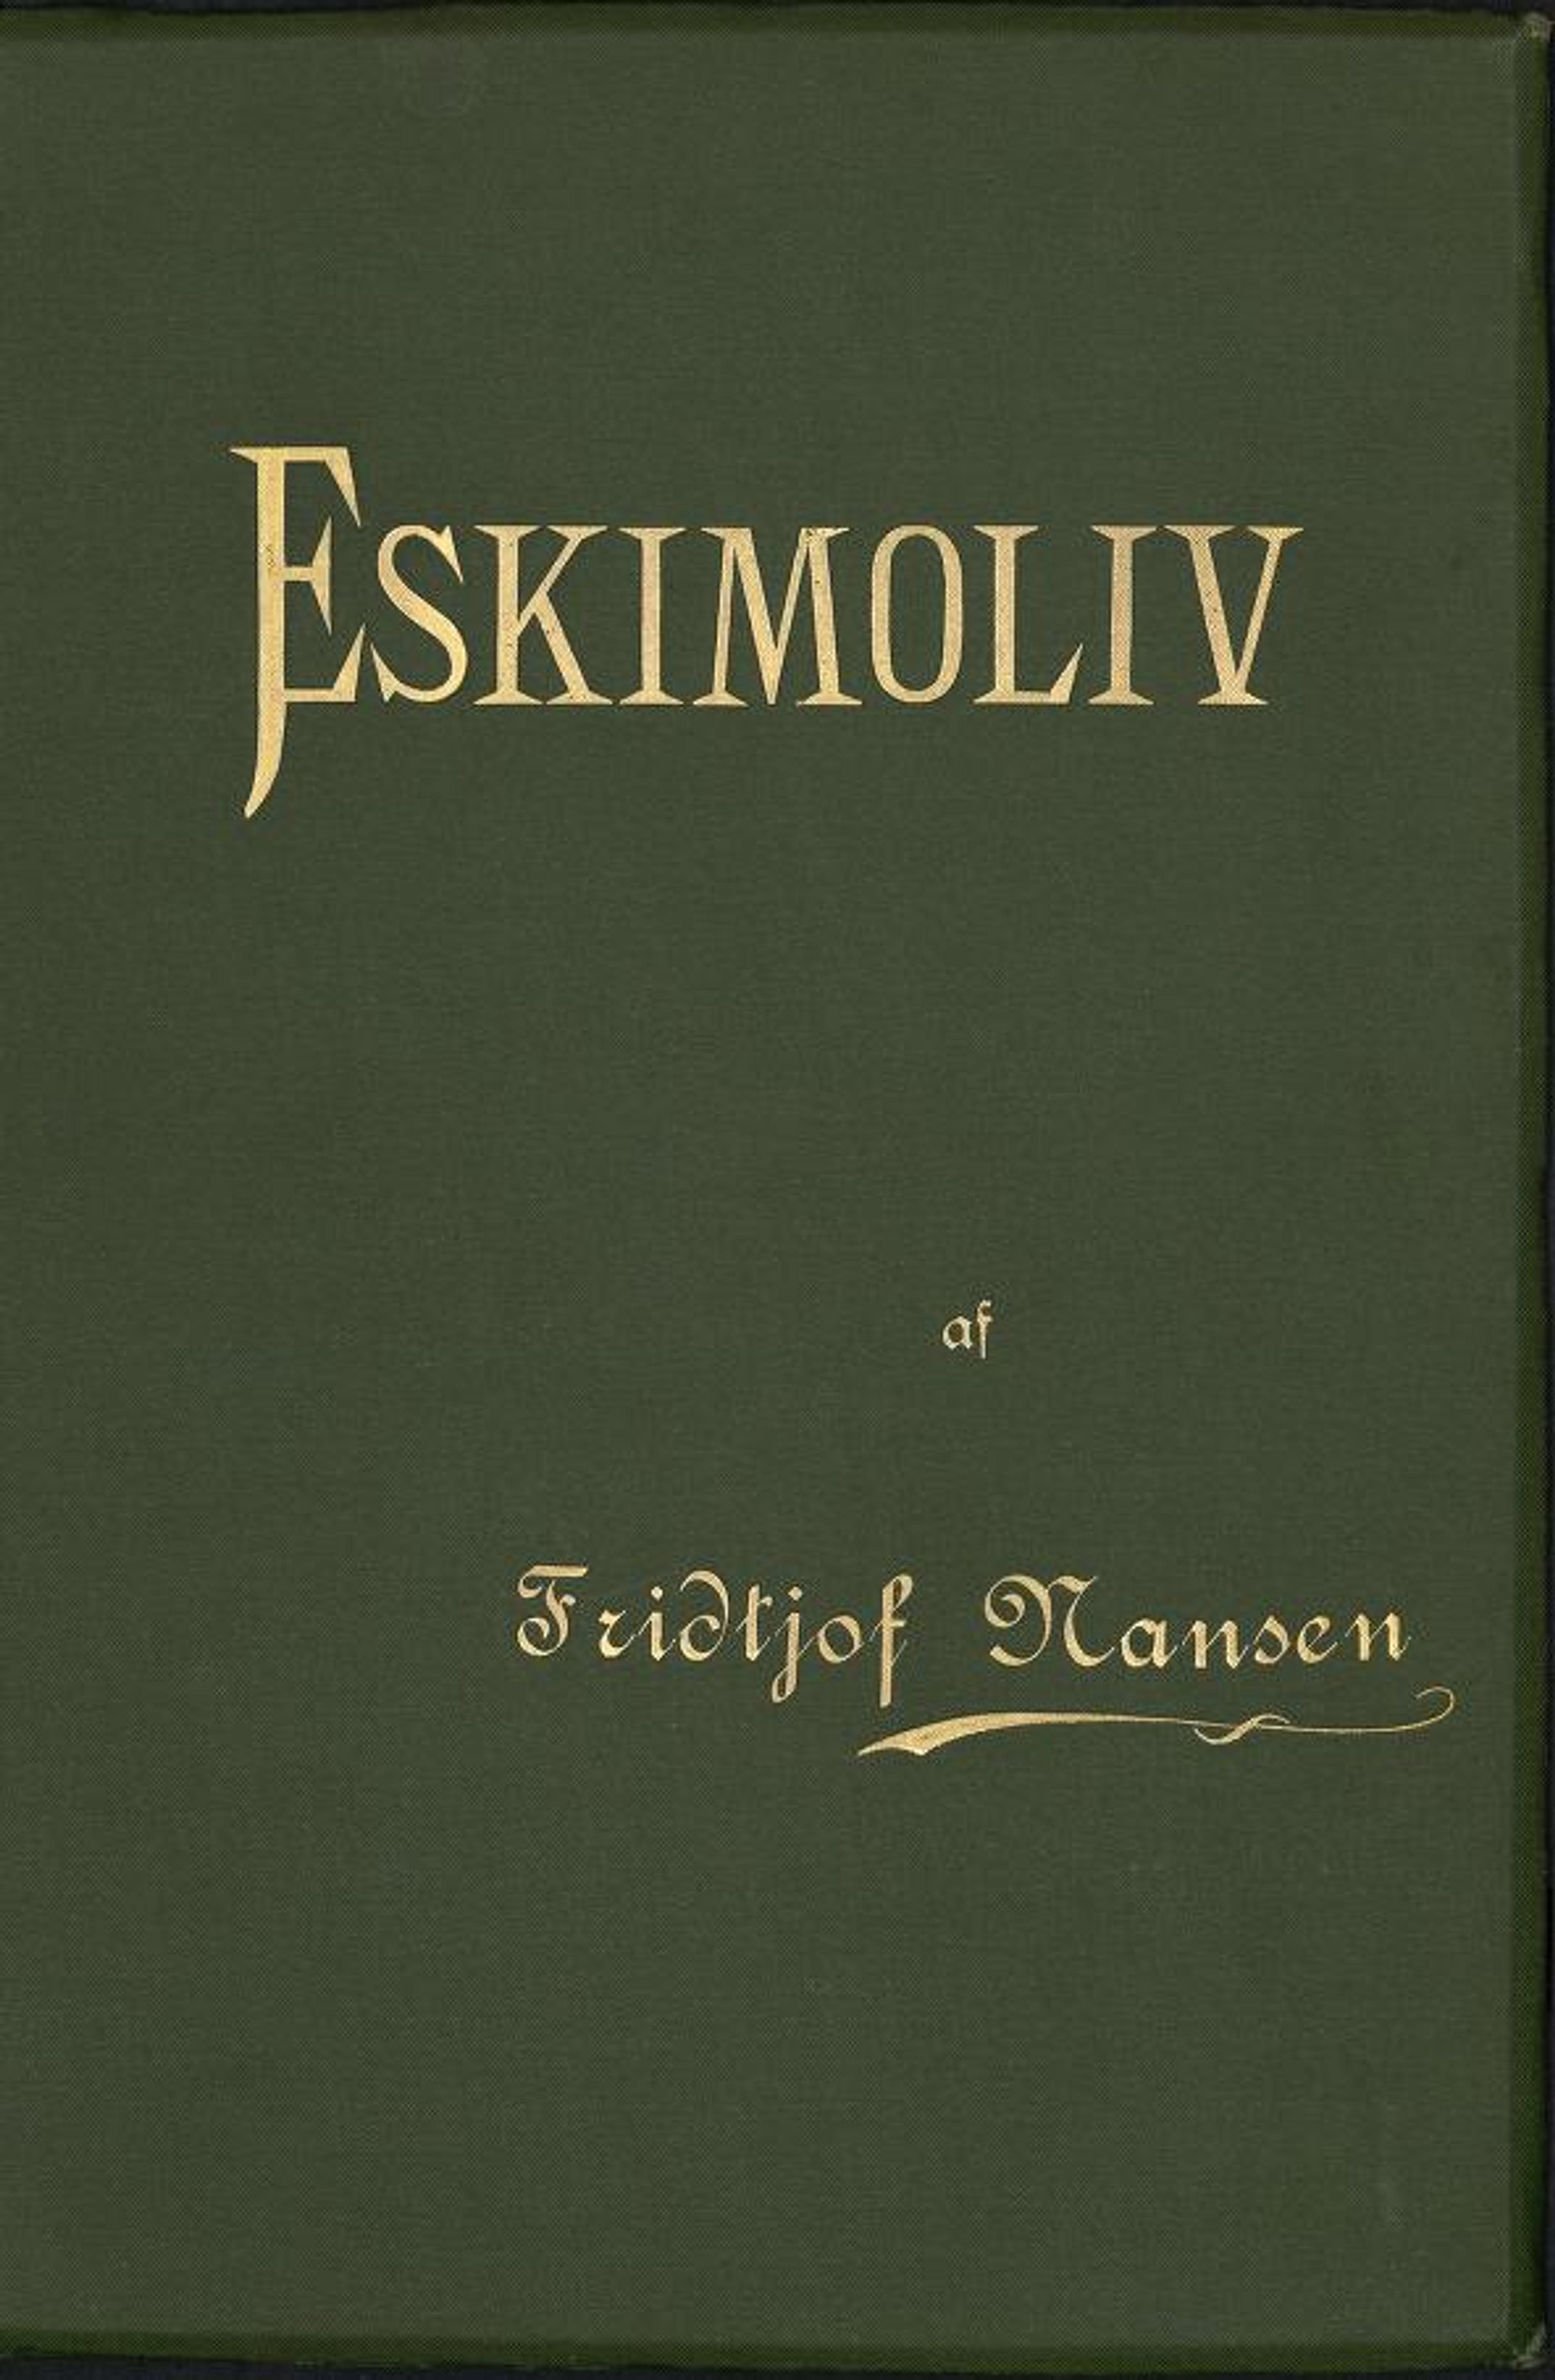 Eskimoliv